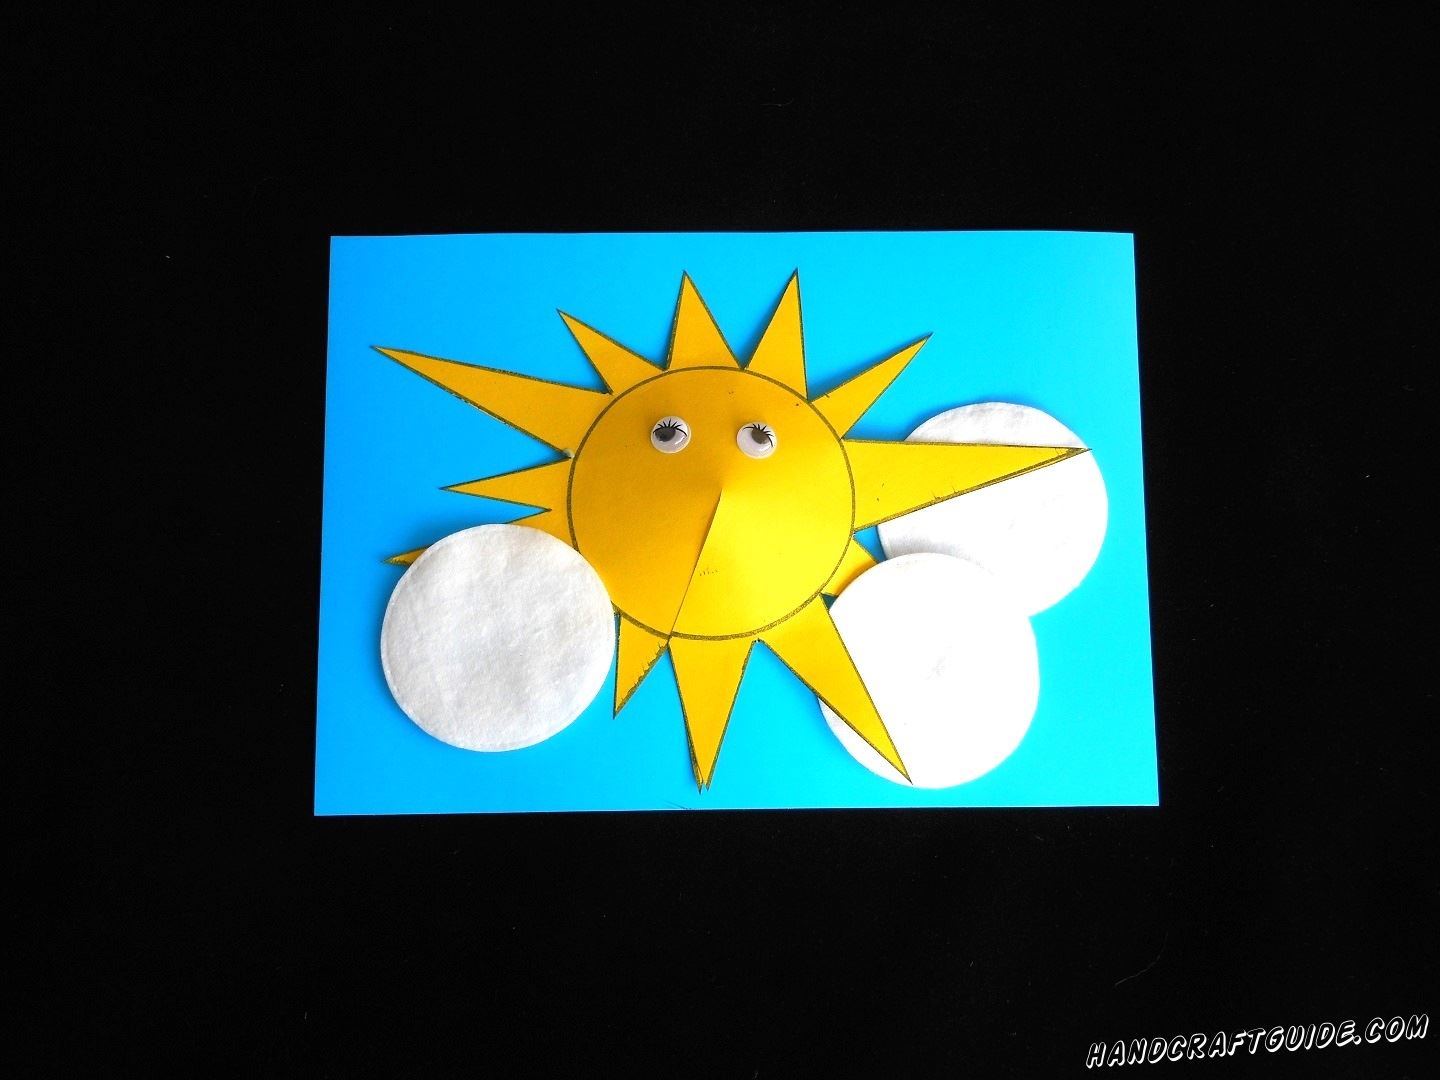 аппликация солнца на небе из картона и ватных дисков